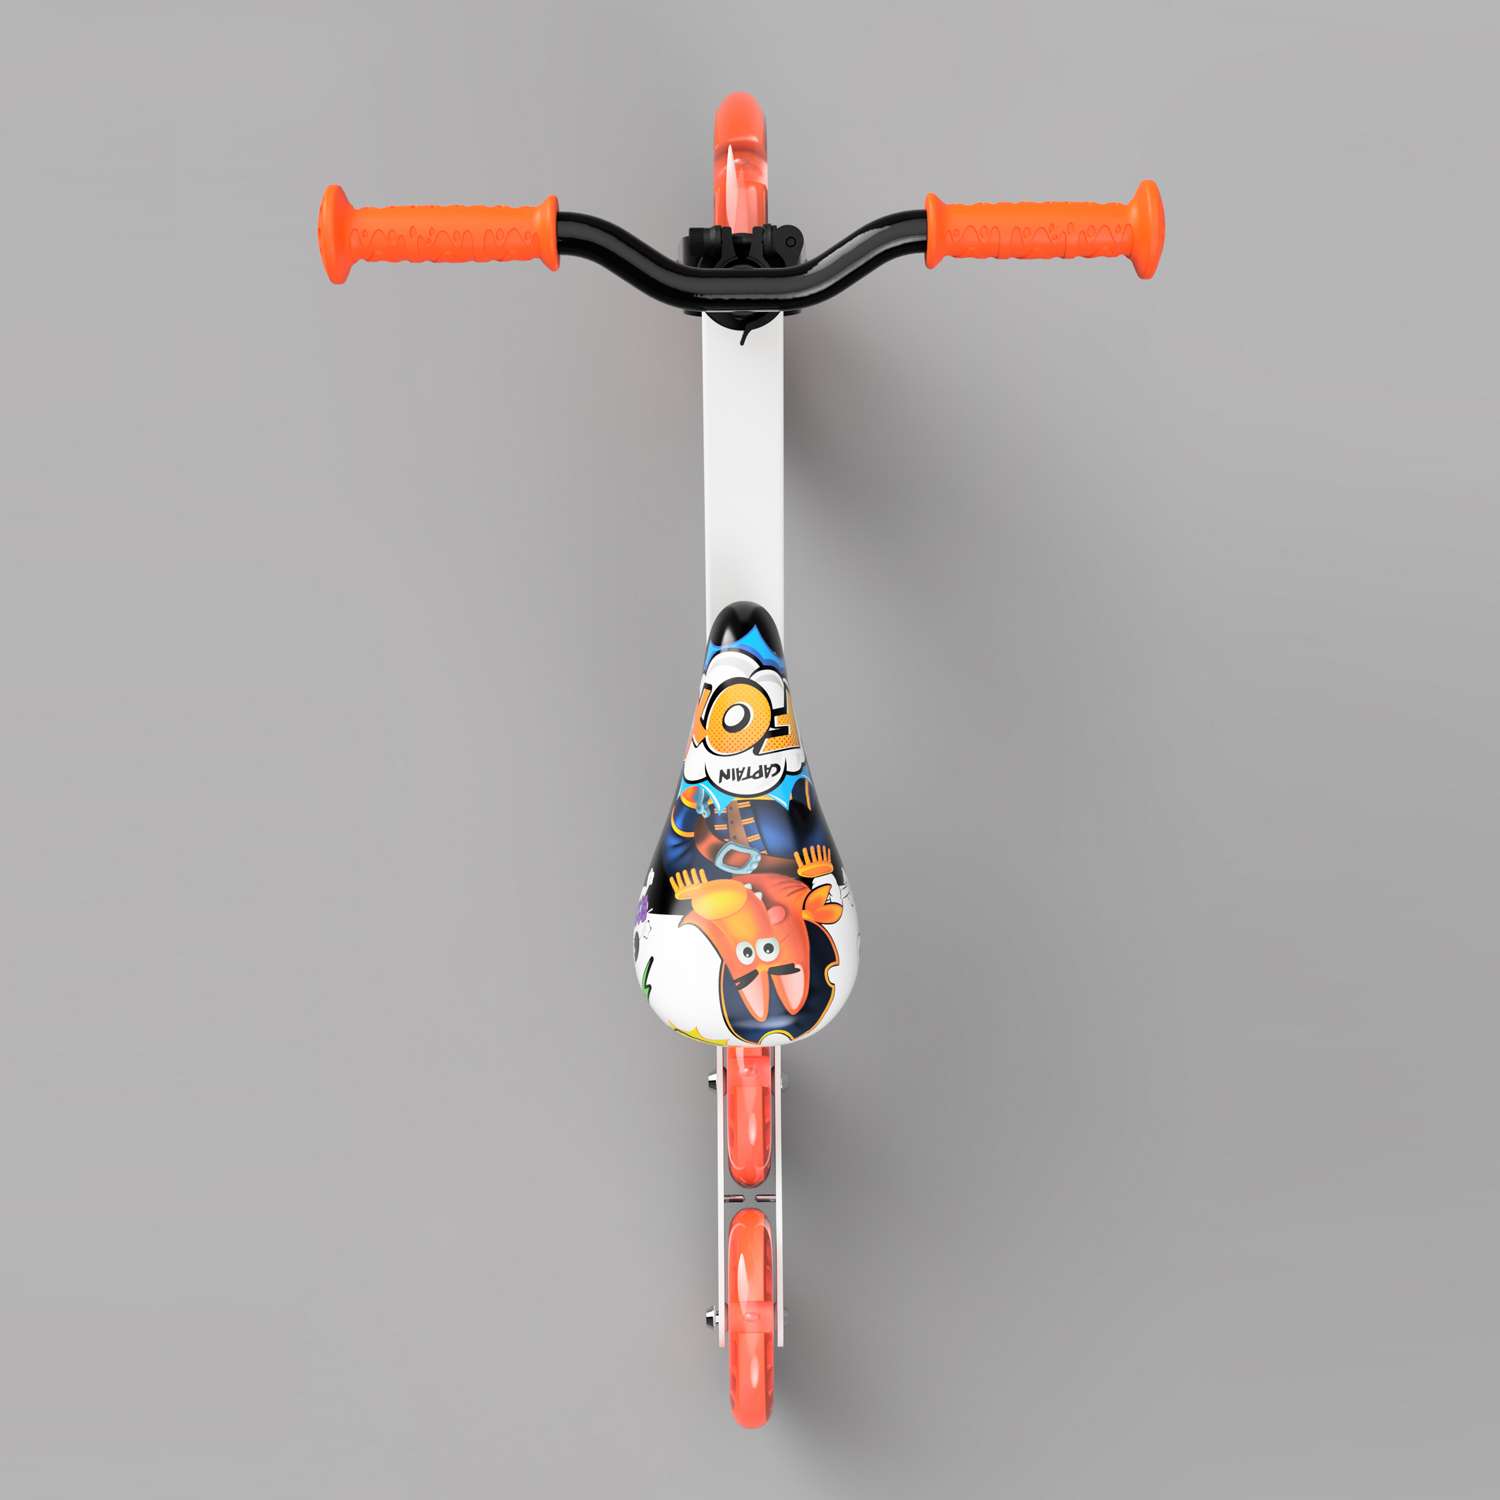 Беговел Small Rider Turbo Bike оранжевый - фото 8